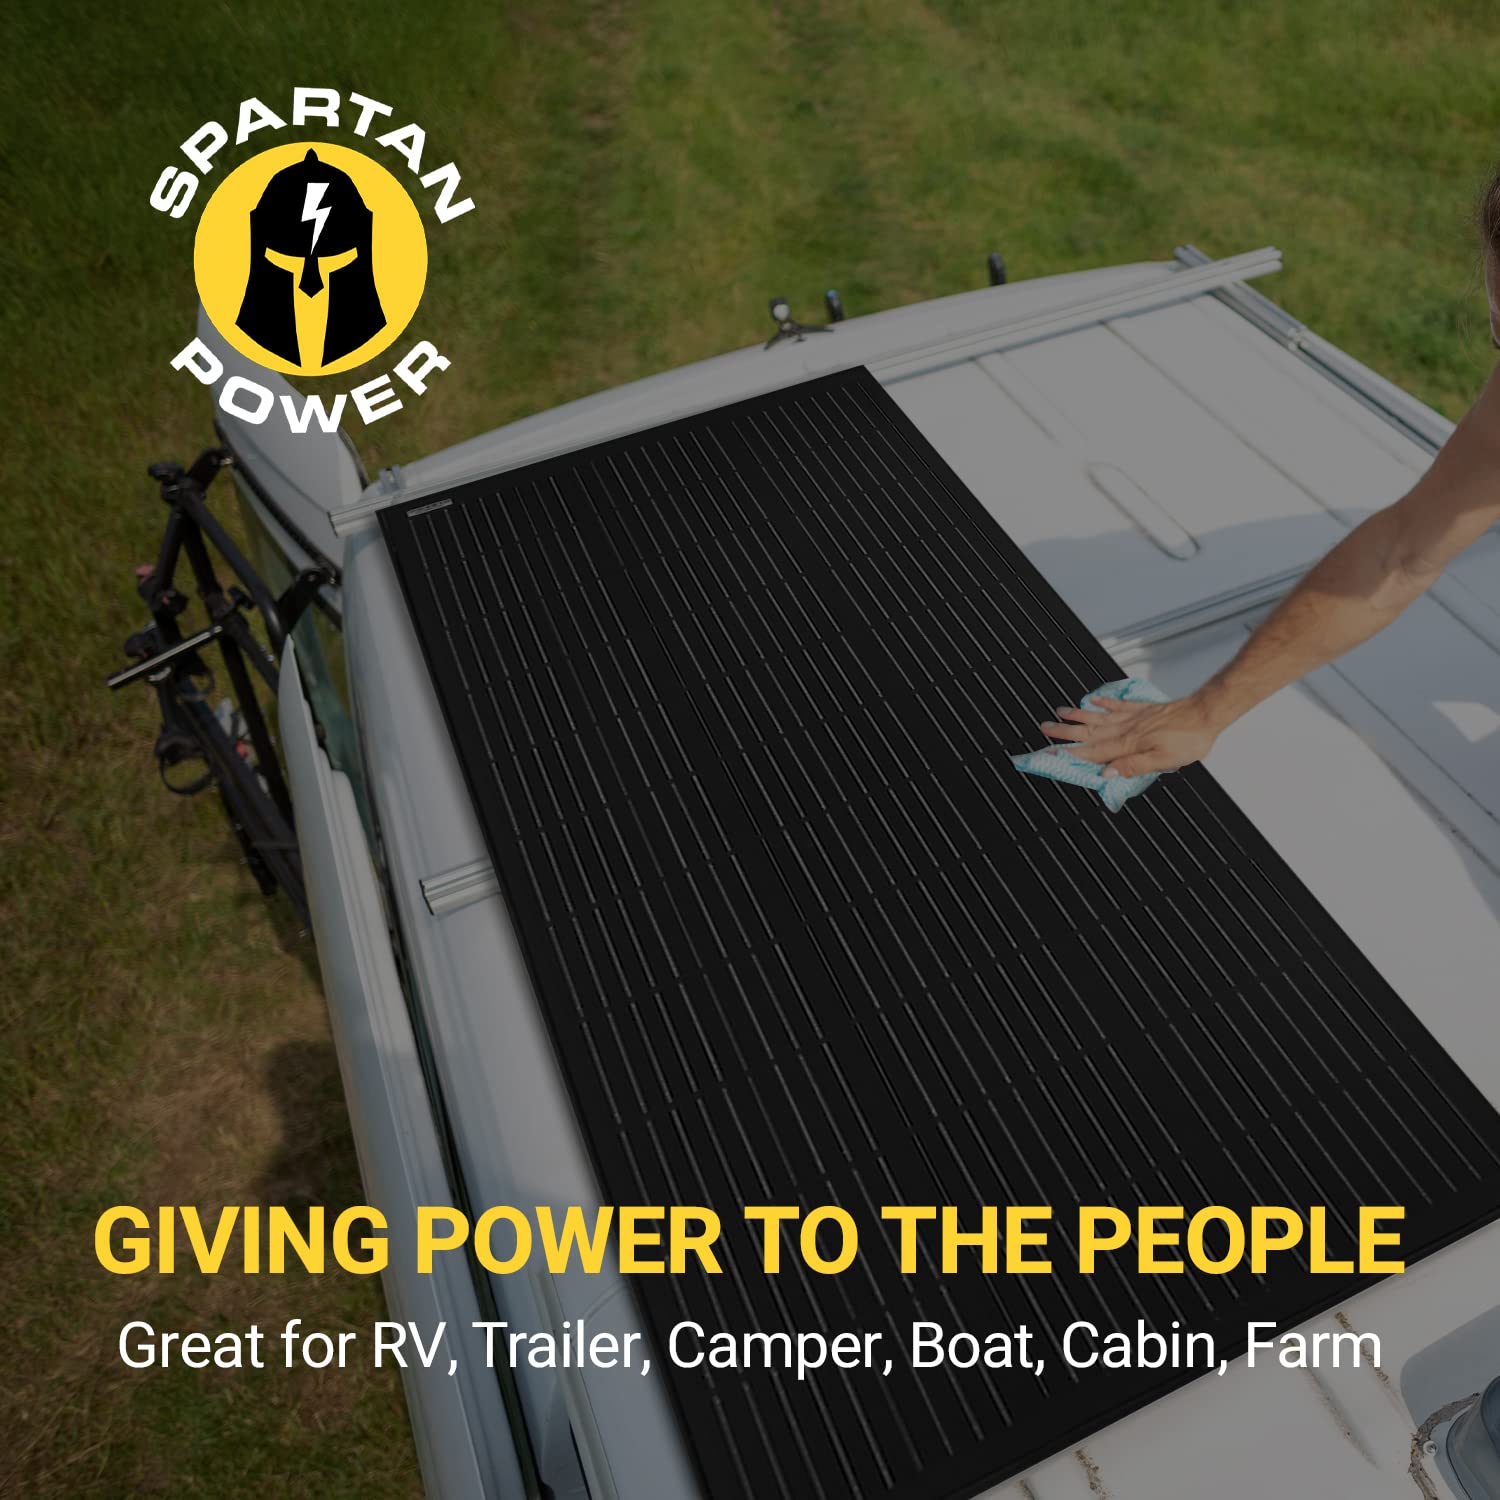 Spartan Power 200 Watt Solar Panel 9 Bus Bar Black Mono Great for RV, Trailer, Camper, Boat, Cabin, Farm, SP-200W